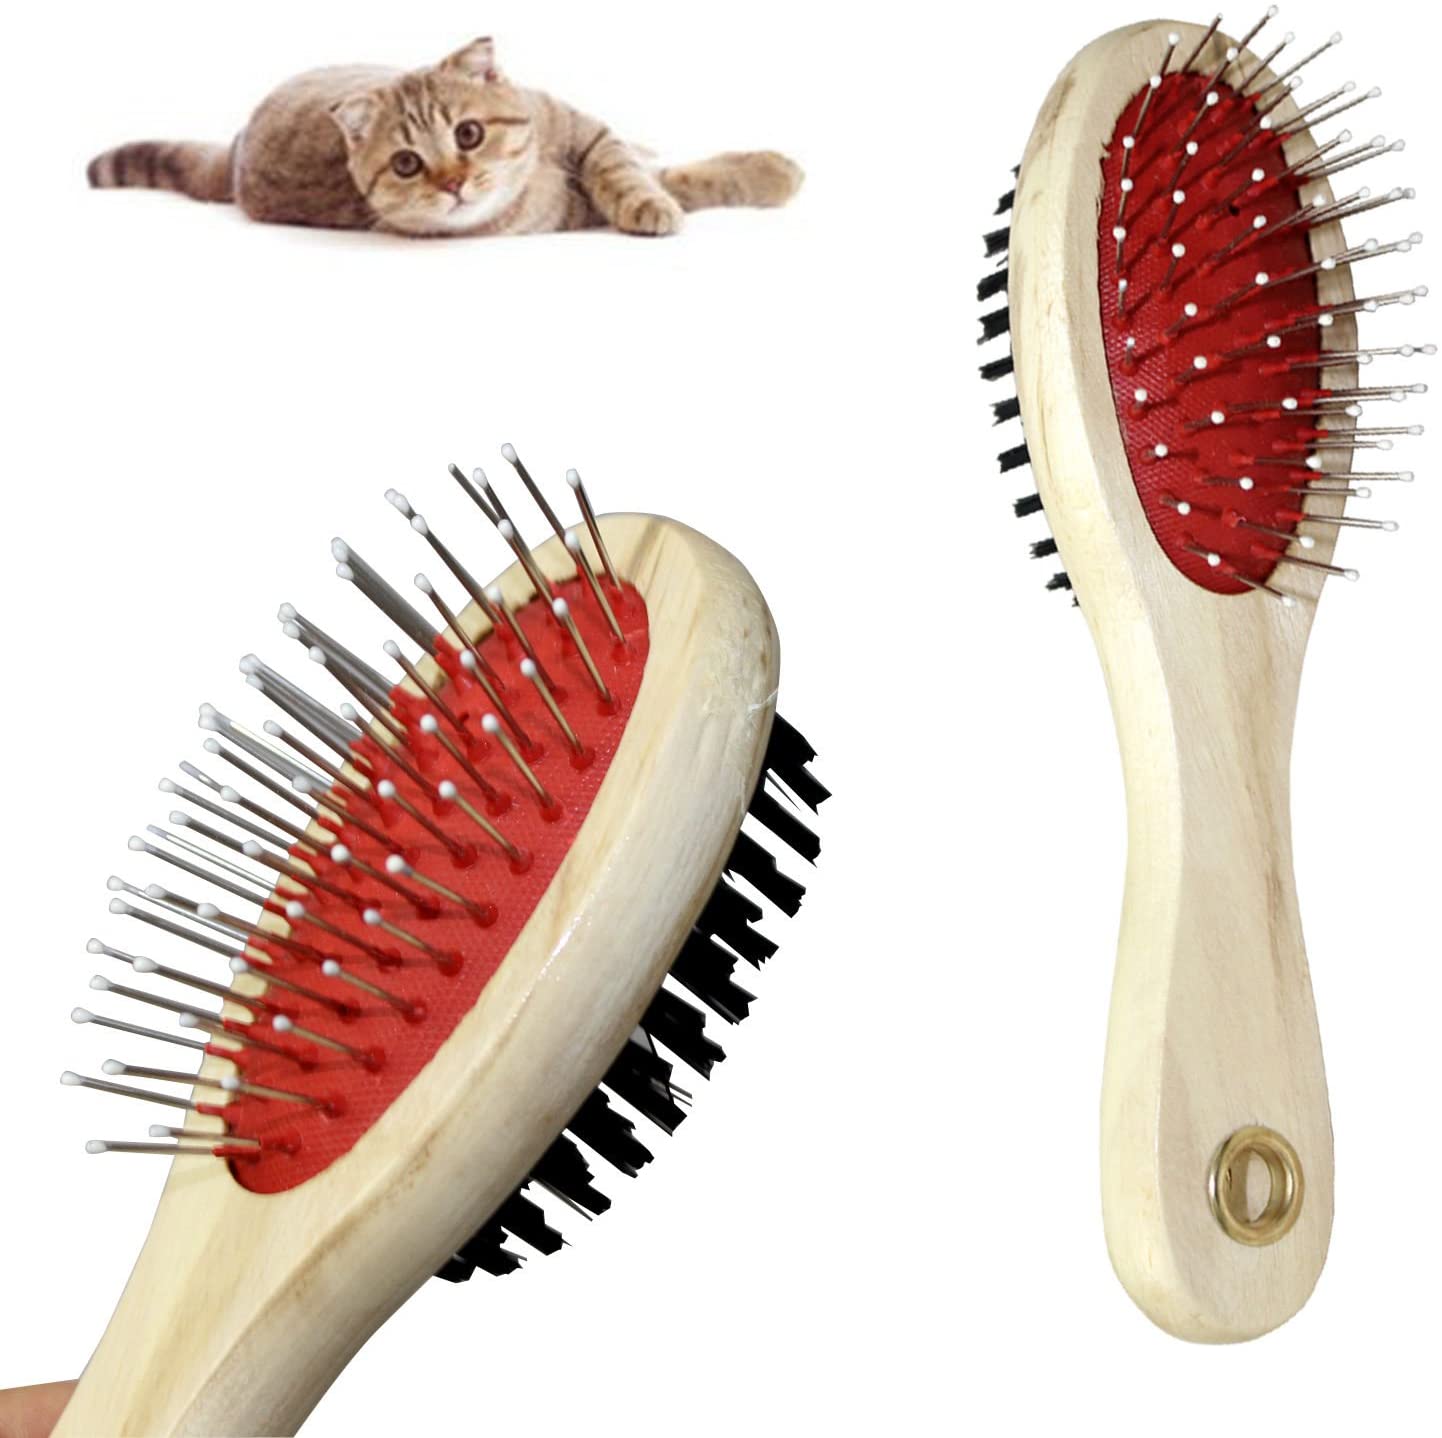  Tech Traders® Cepillo de doble cara para mascotas, perros y gatos, cepillo de pelo, ordenado grande 